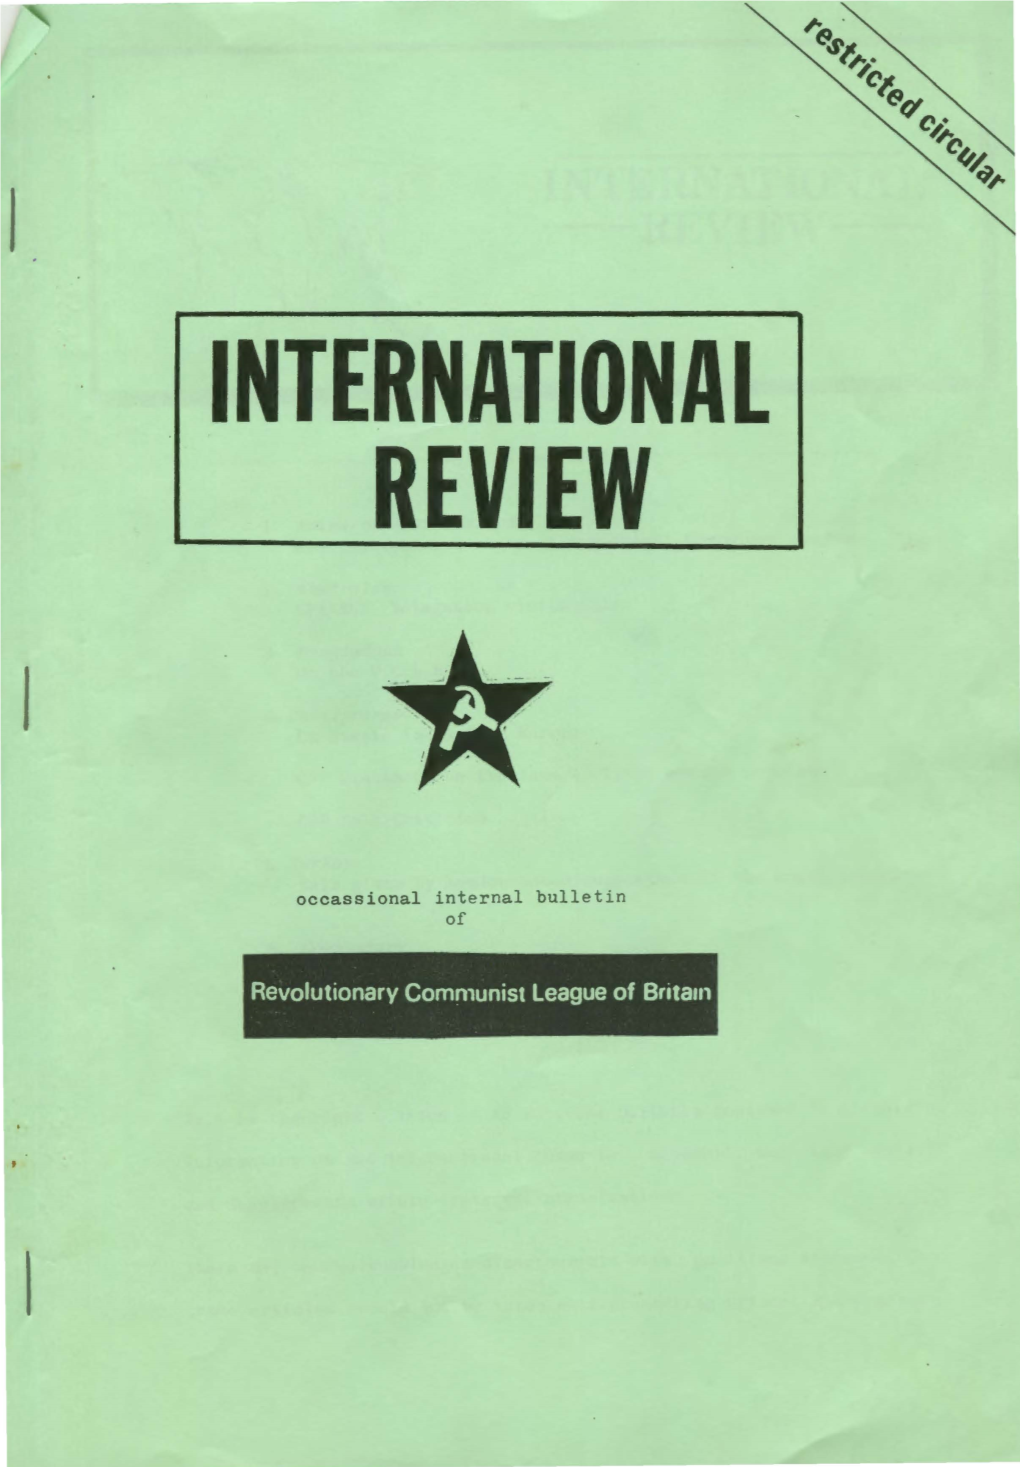 Revolutionary Communist League of Brita1n INTERNATIONAL -REVIEW